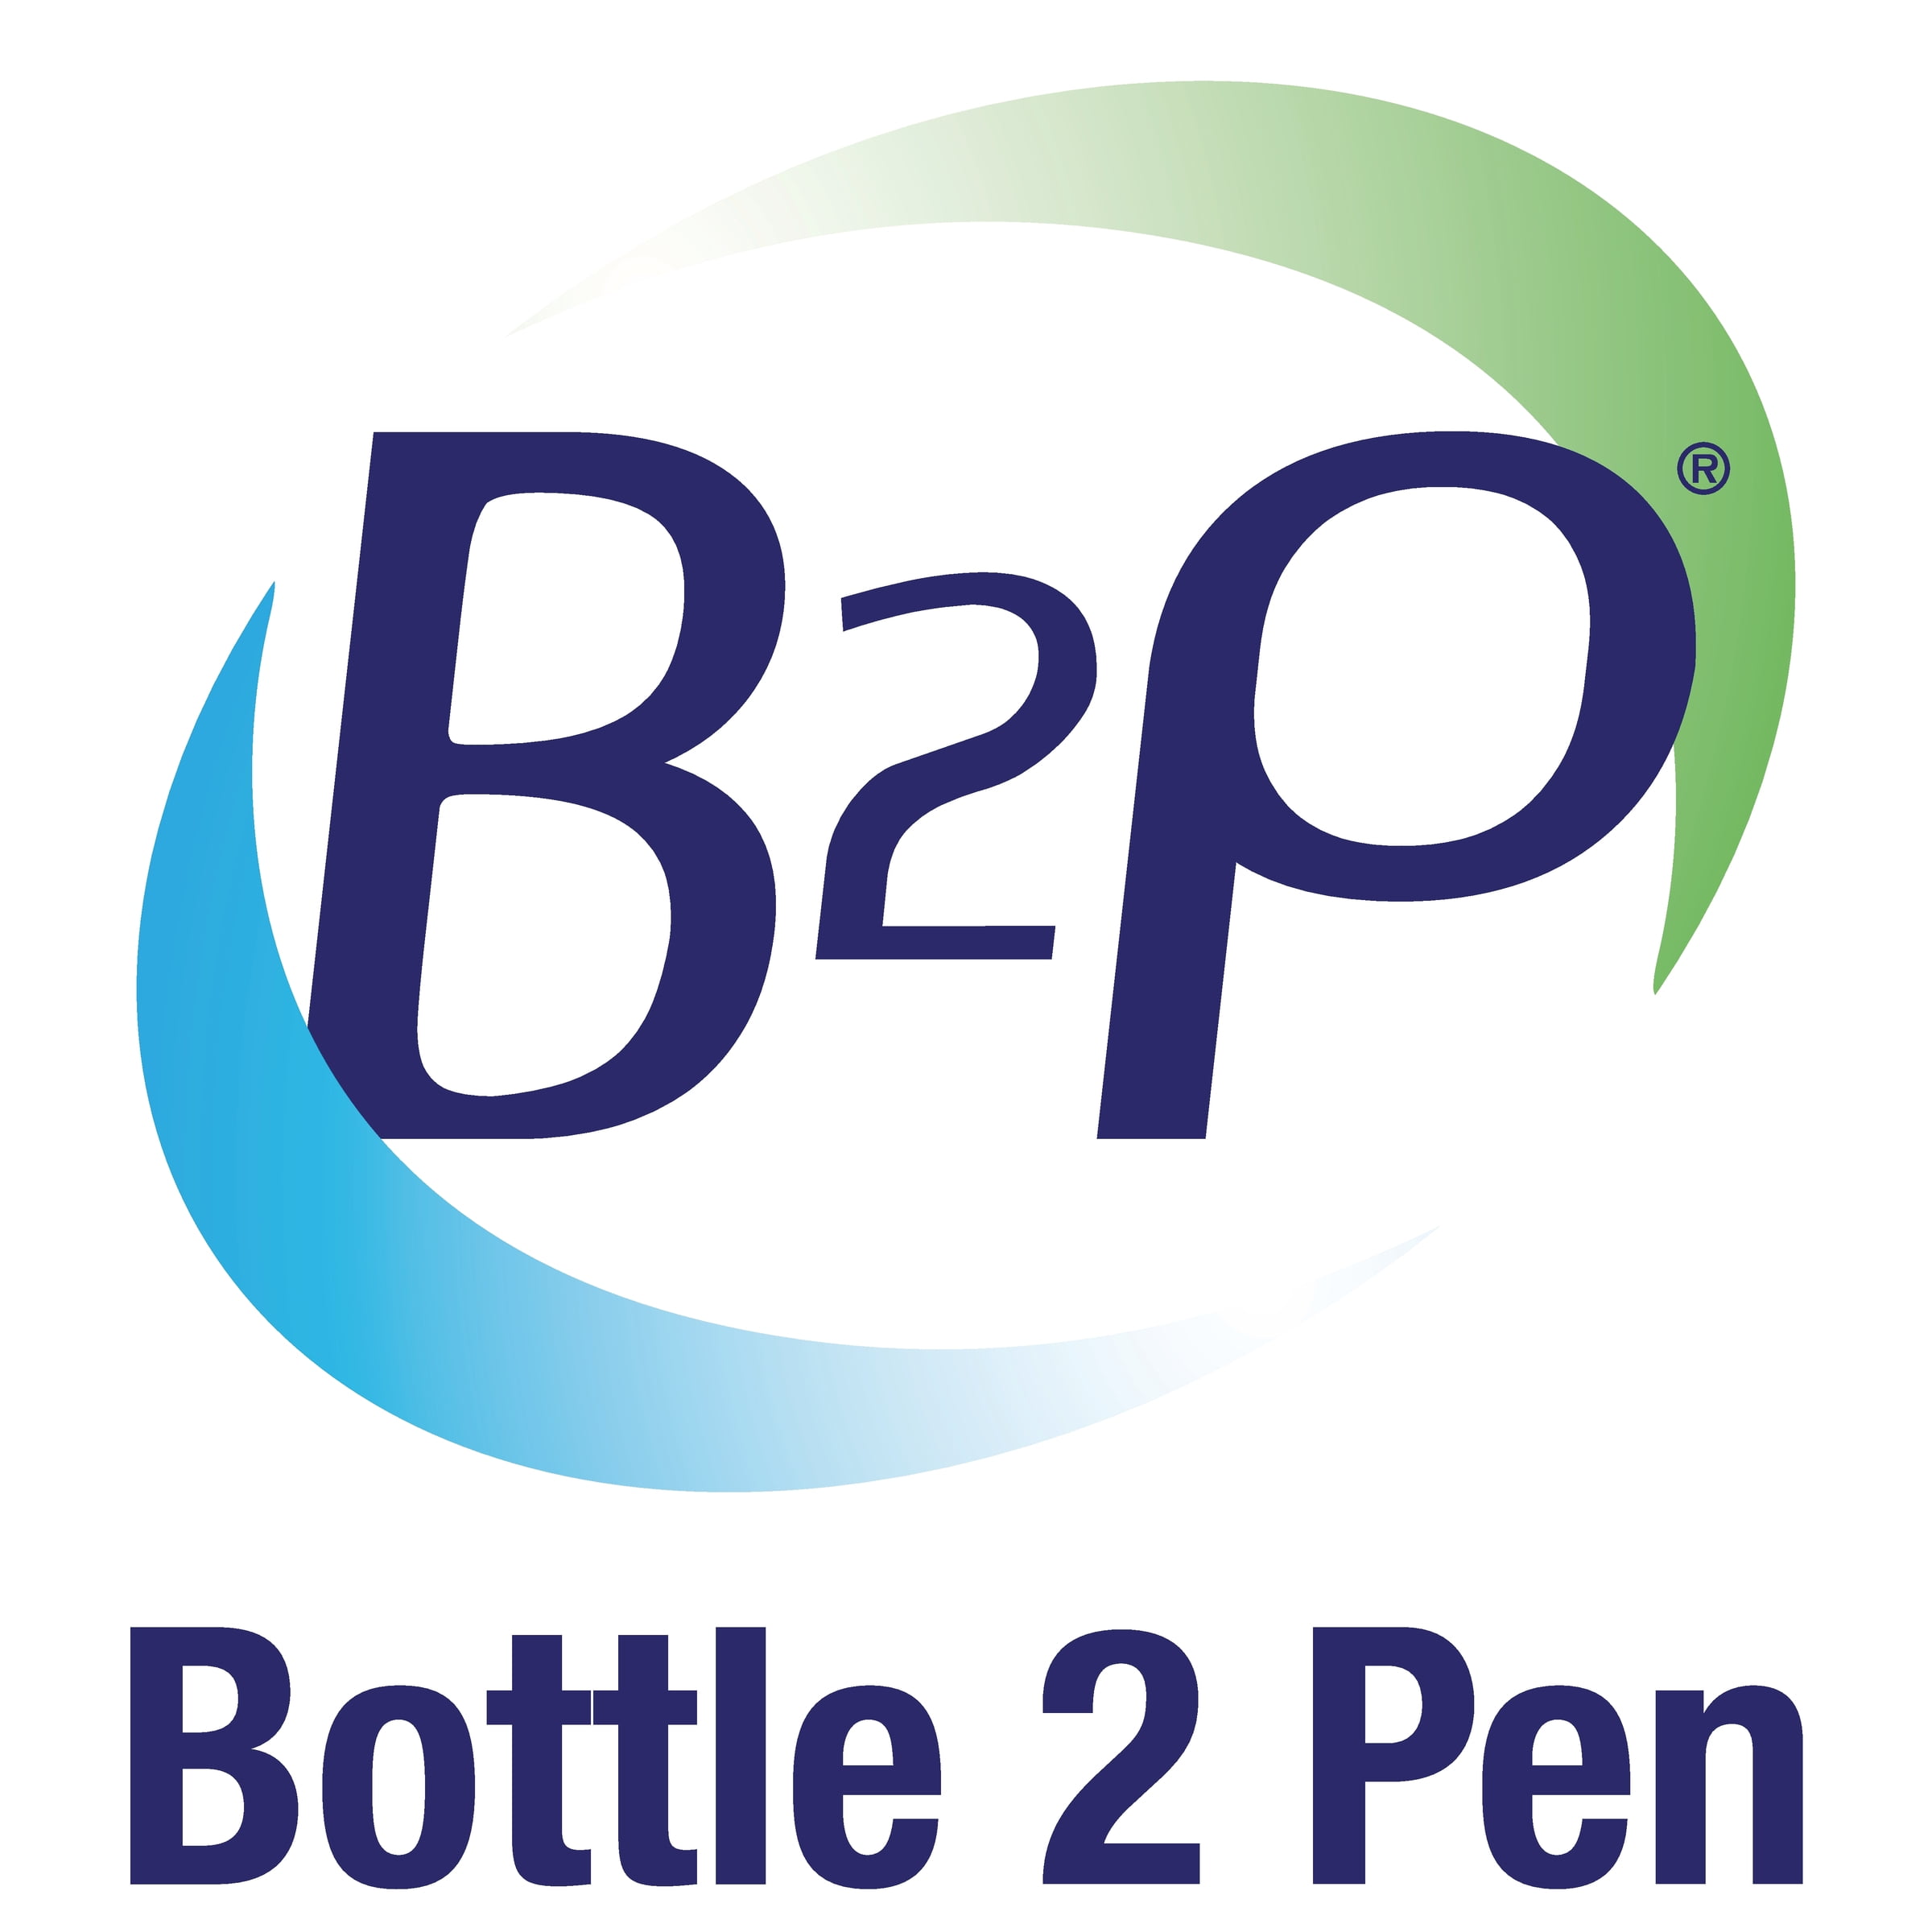 Pilot Bottle to Pen (B2P) B2P BeGreen Fine Point Gel Pens - Fine